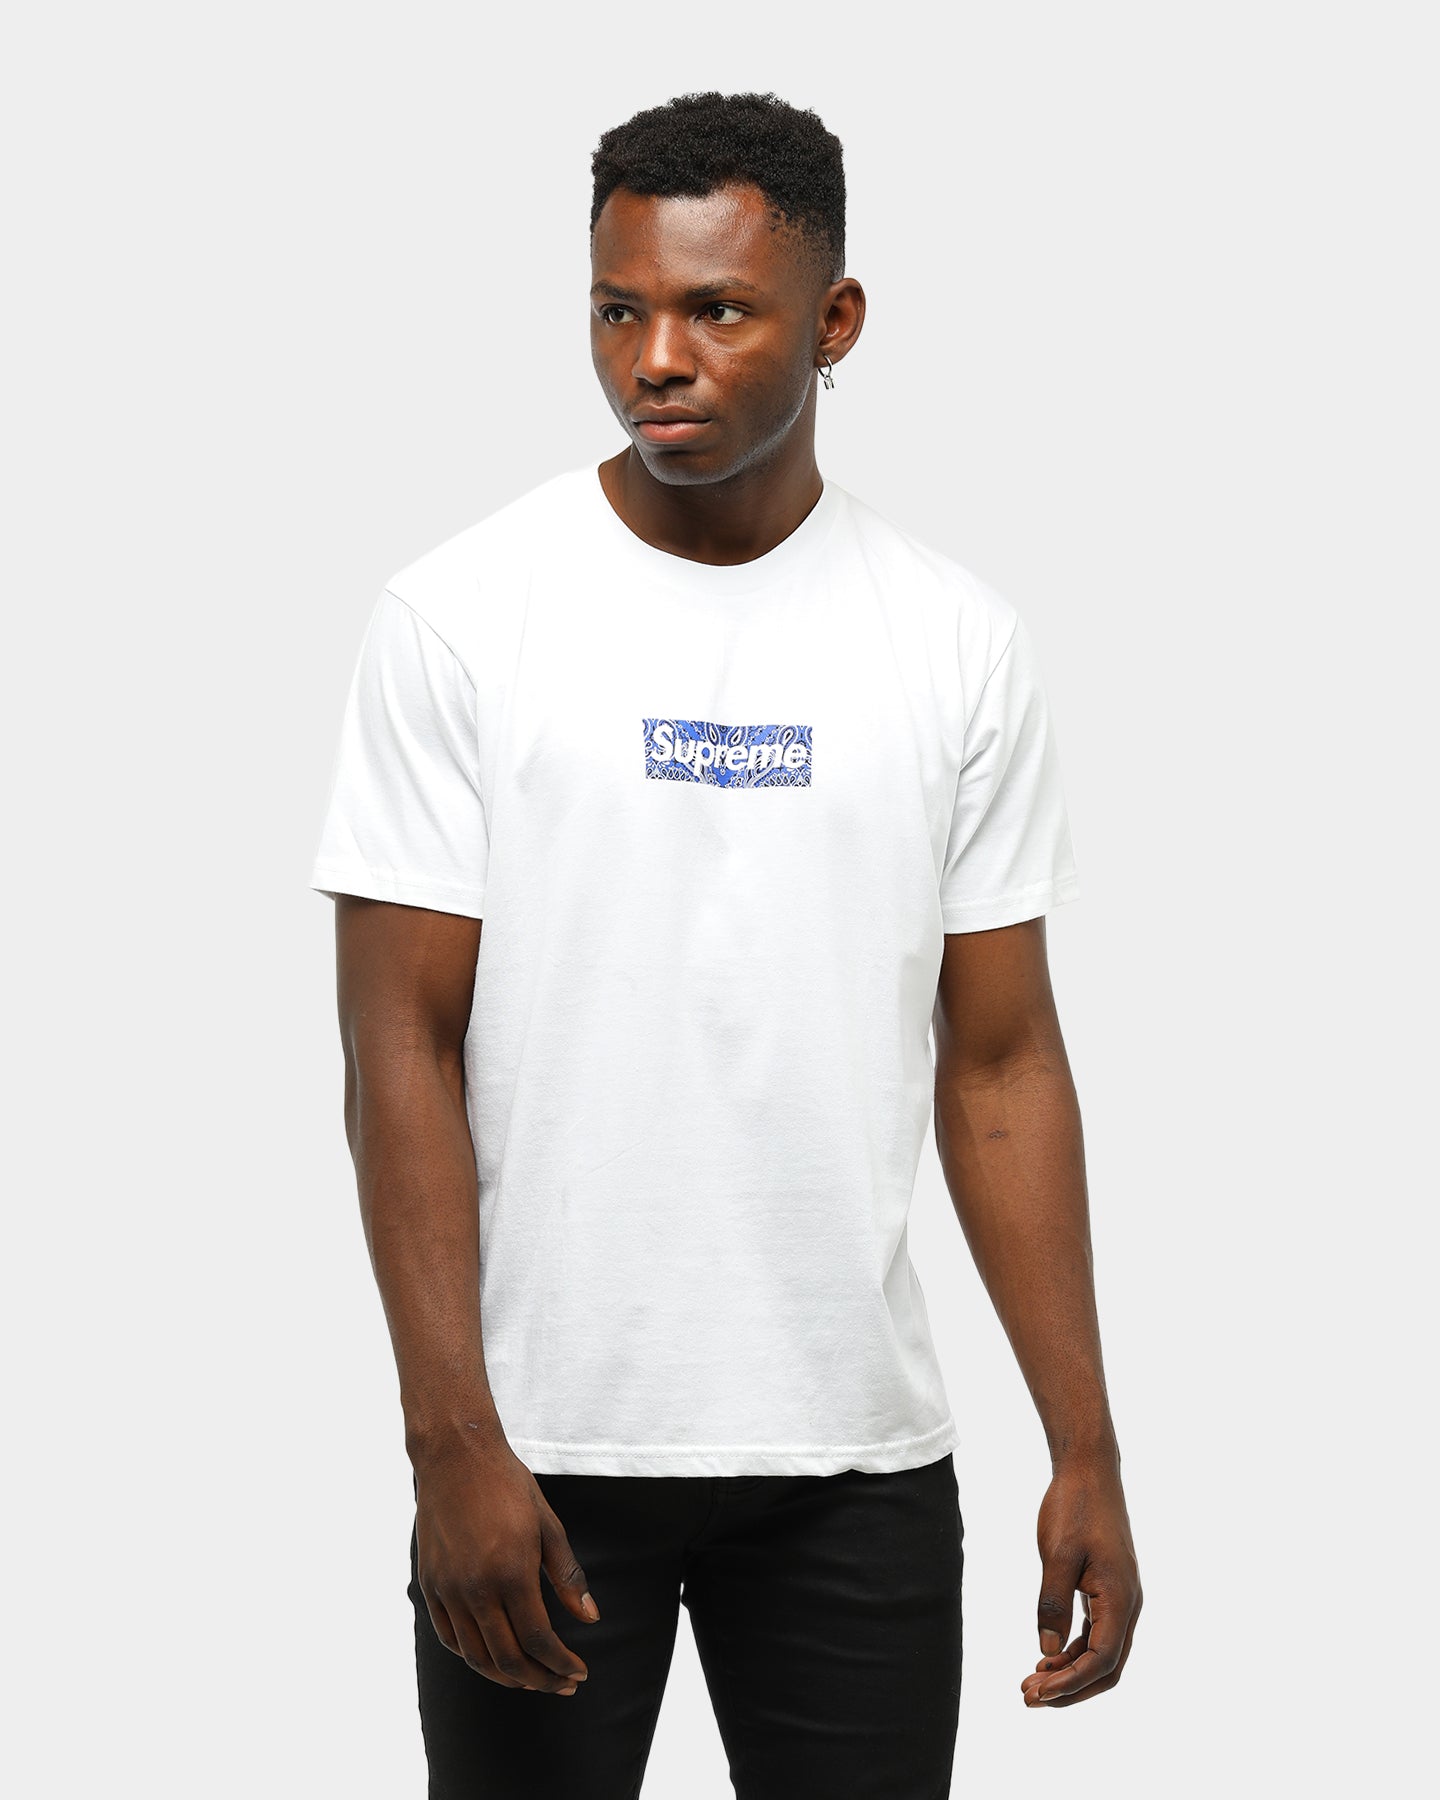 Bandana Box Logo Shirt Online, 50% OFF | www.pegasusaerogroup.com